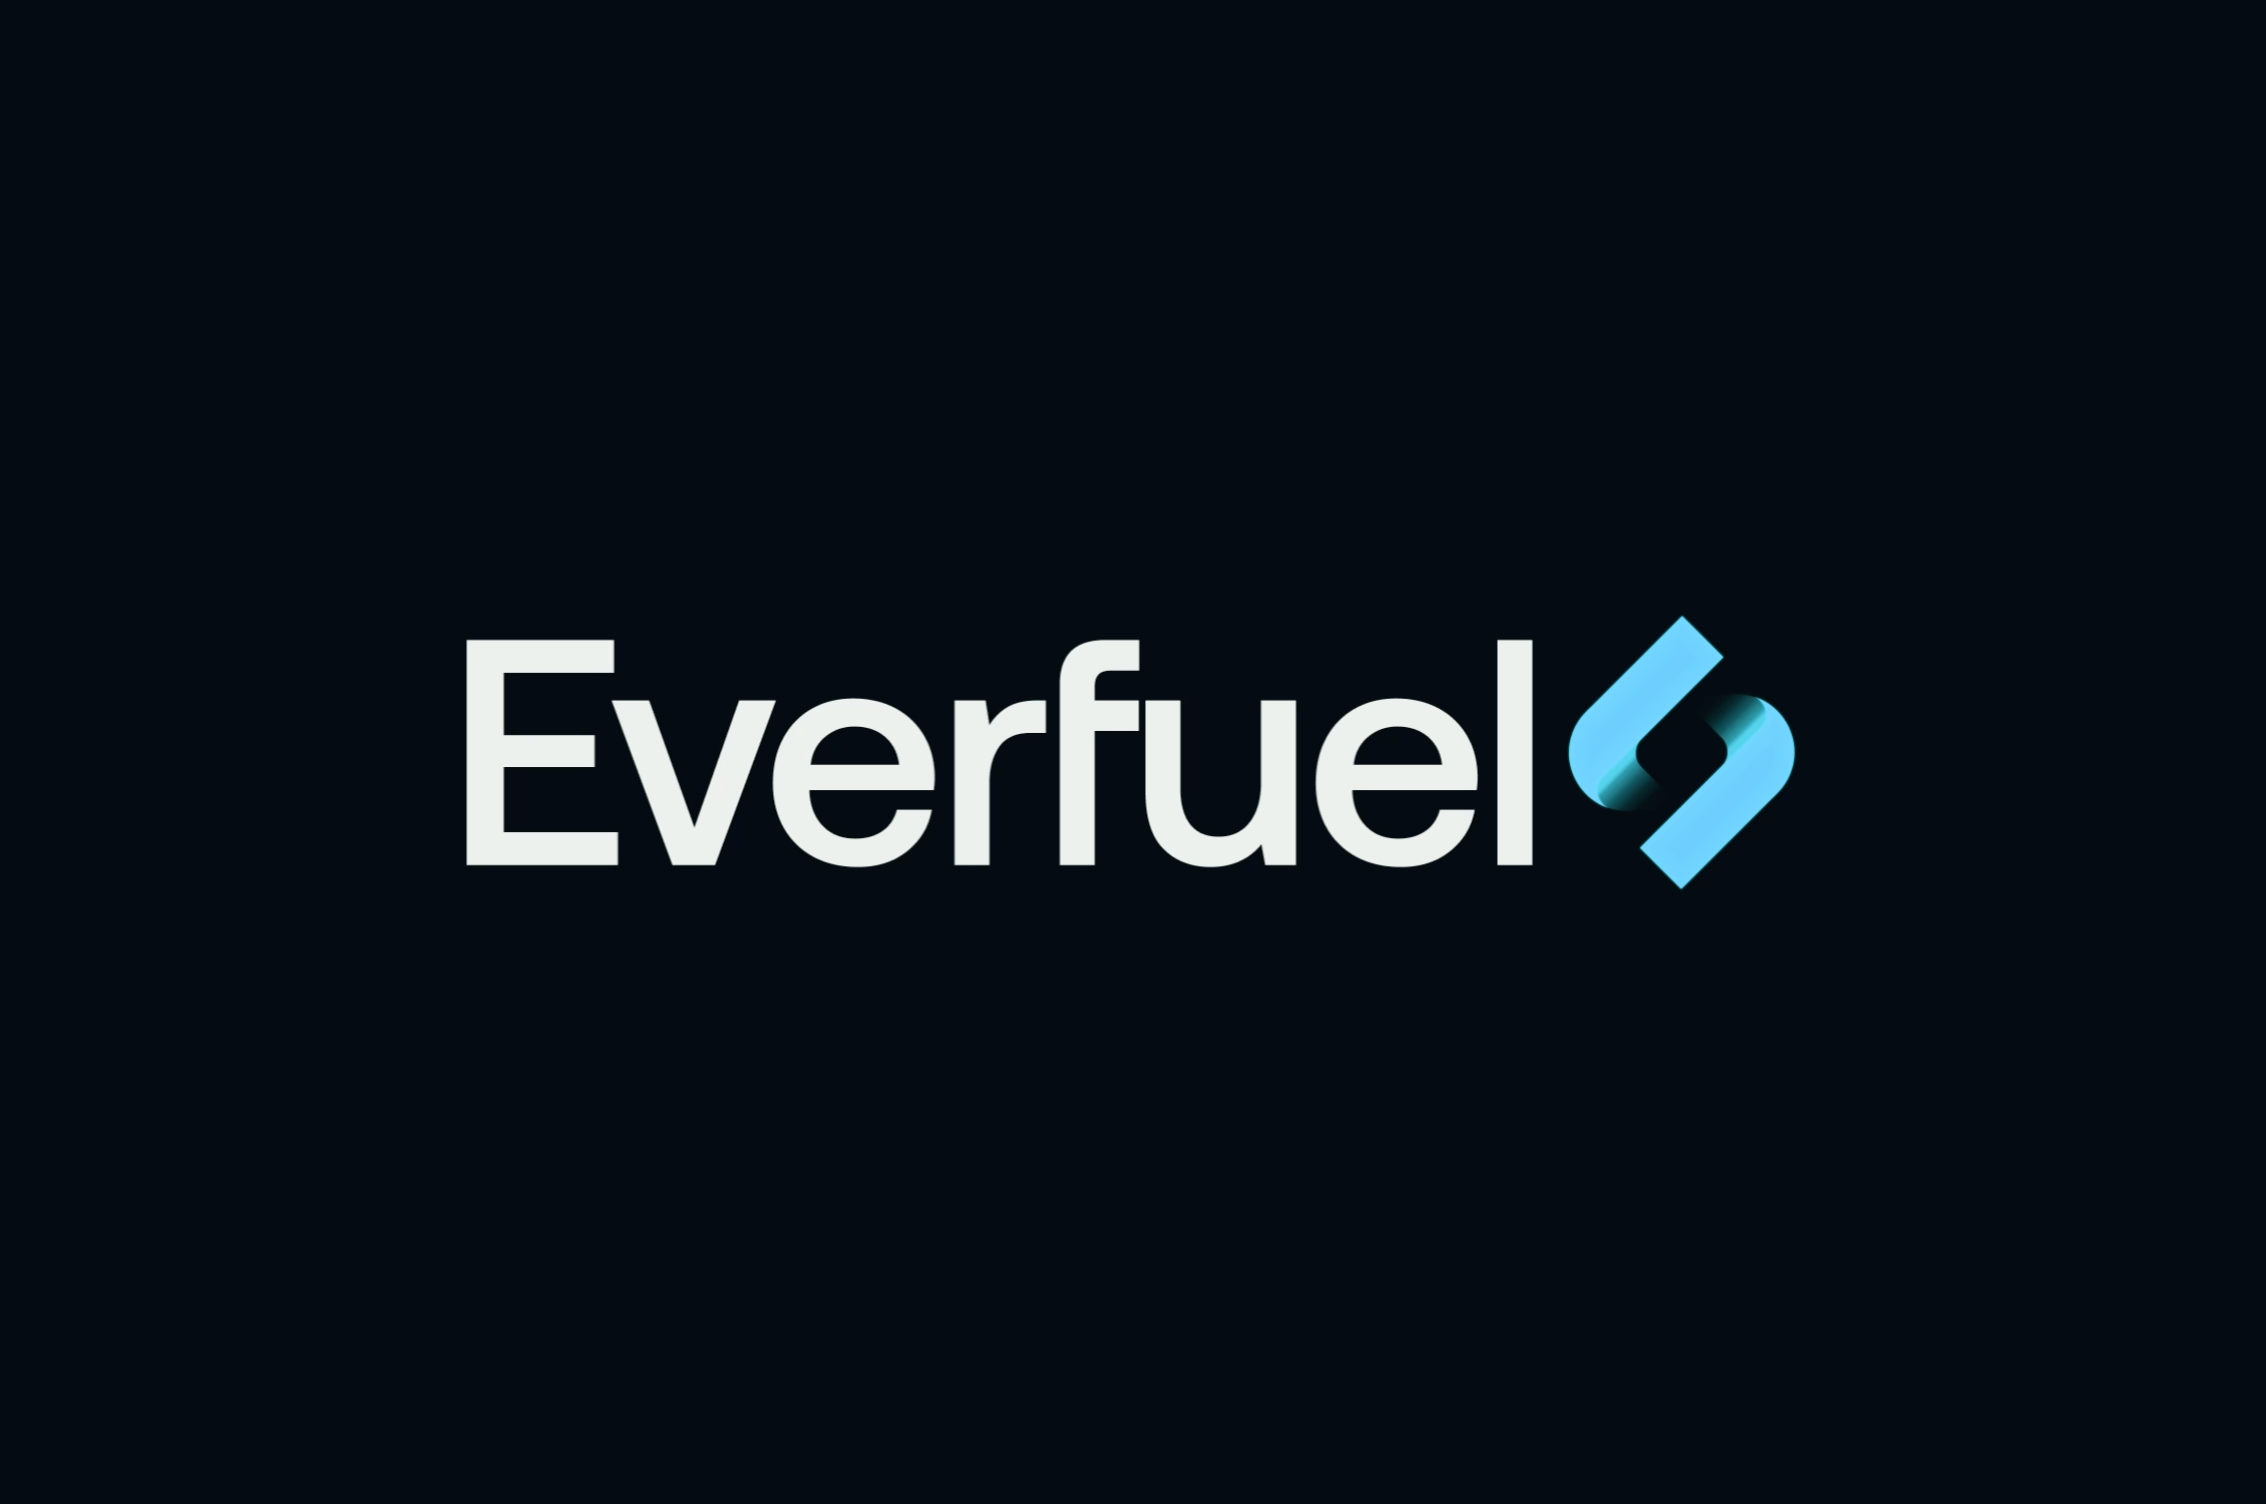 Everfuel